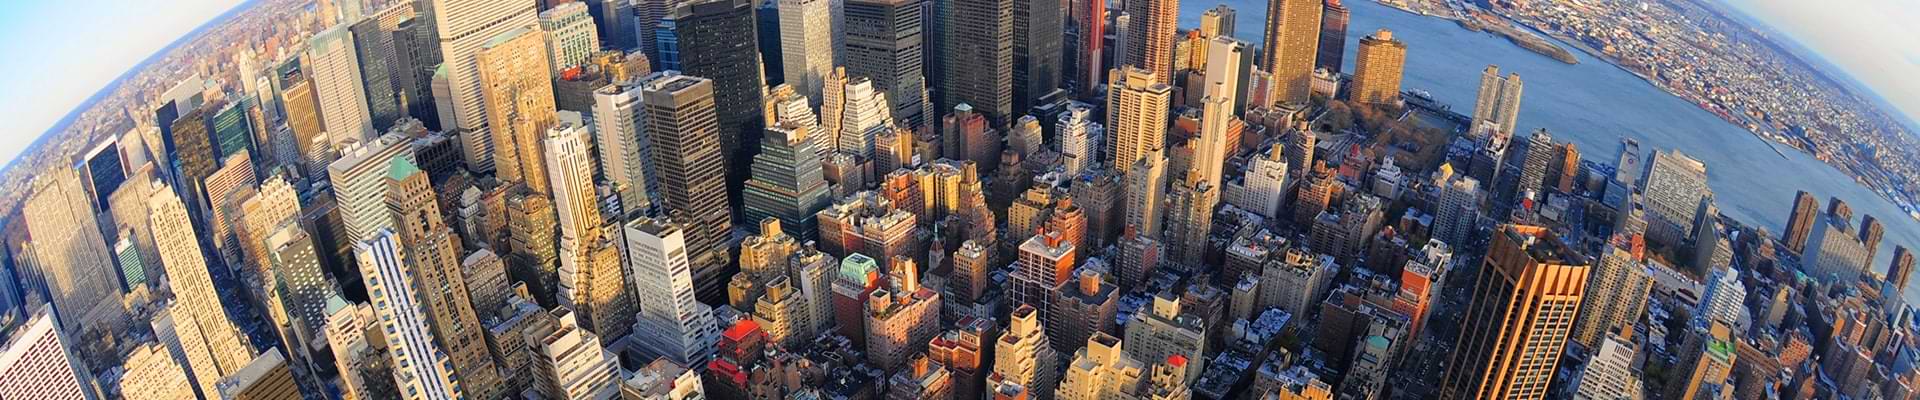 Employer Alert: New York City Salary Range Transparency Law to Take Effect on November 1, 2022